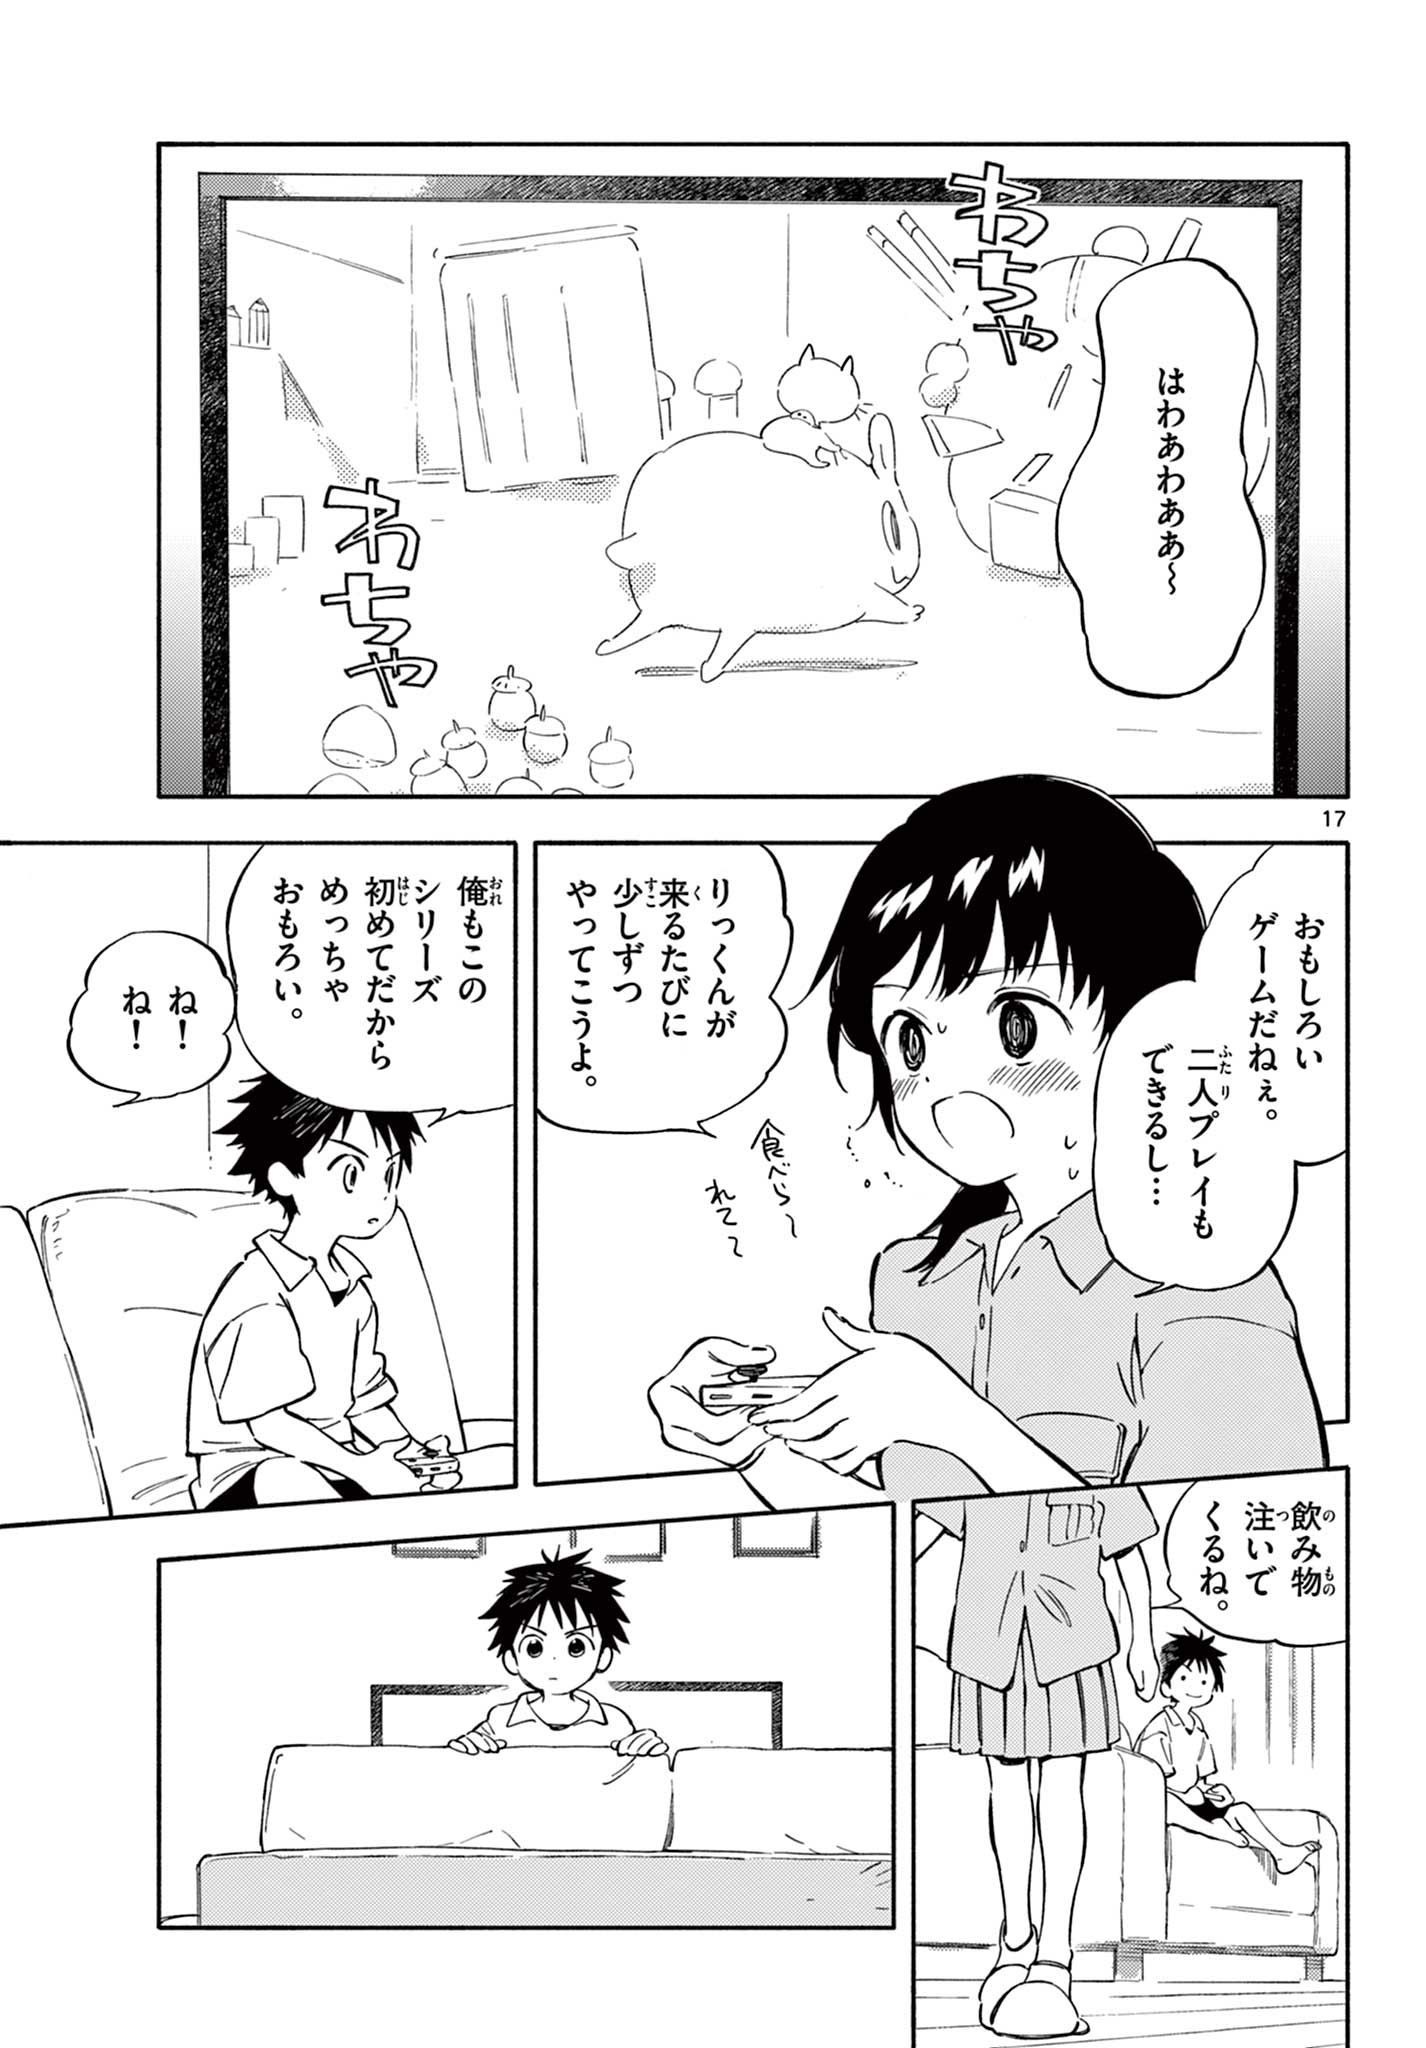 Nami no Shijima no Horizont - Chapter 12.2 - Page 3